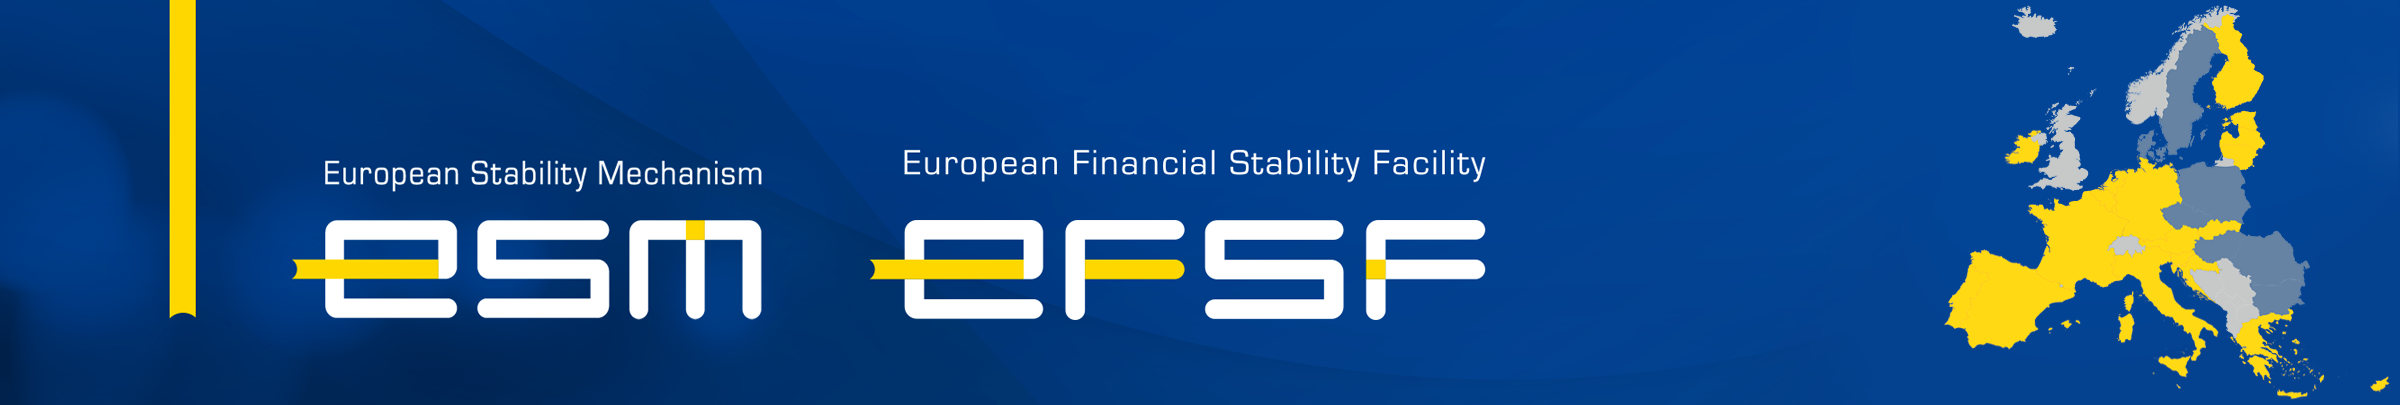 European Stability Mechanism & European Financial Stability Facility